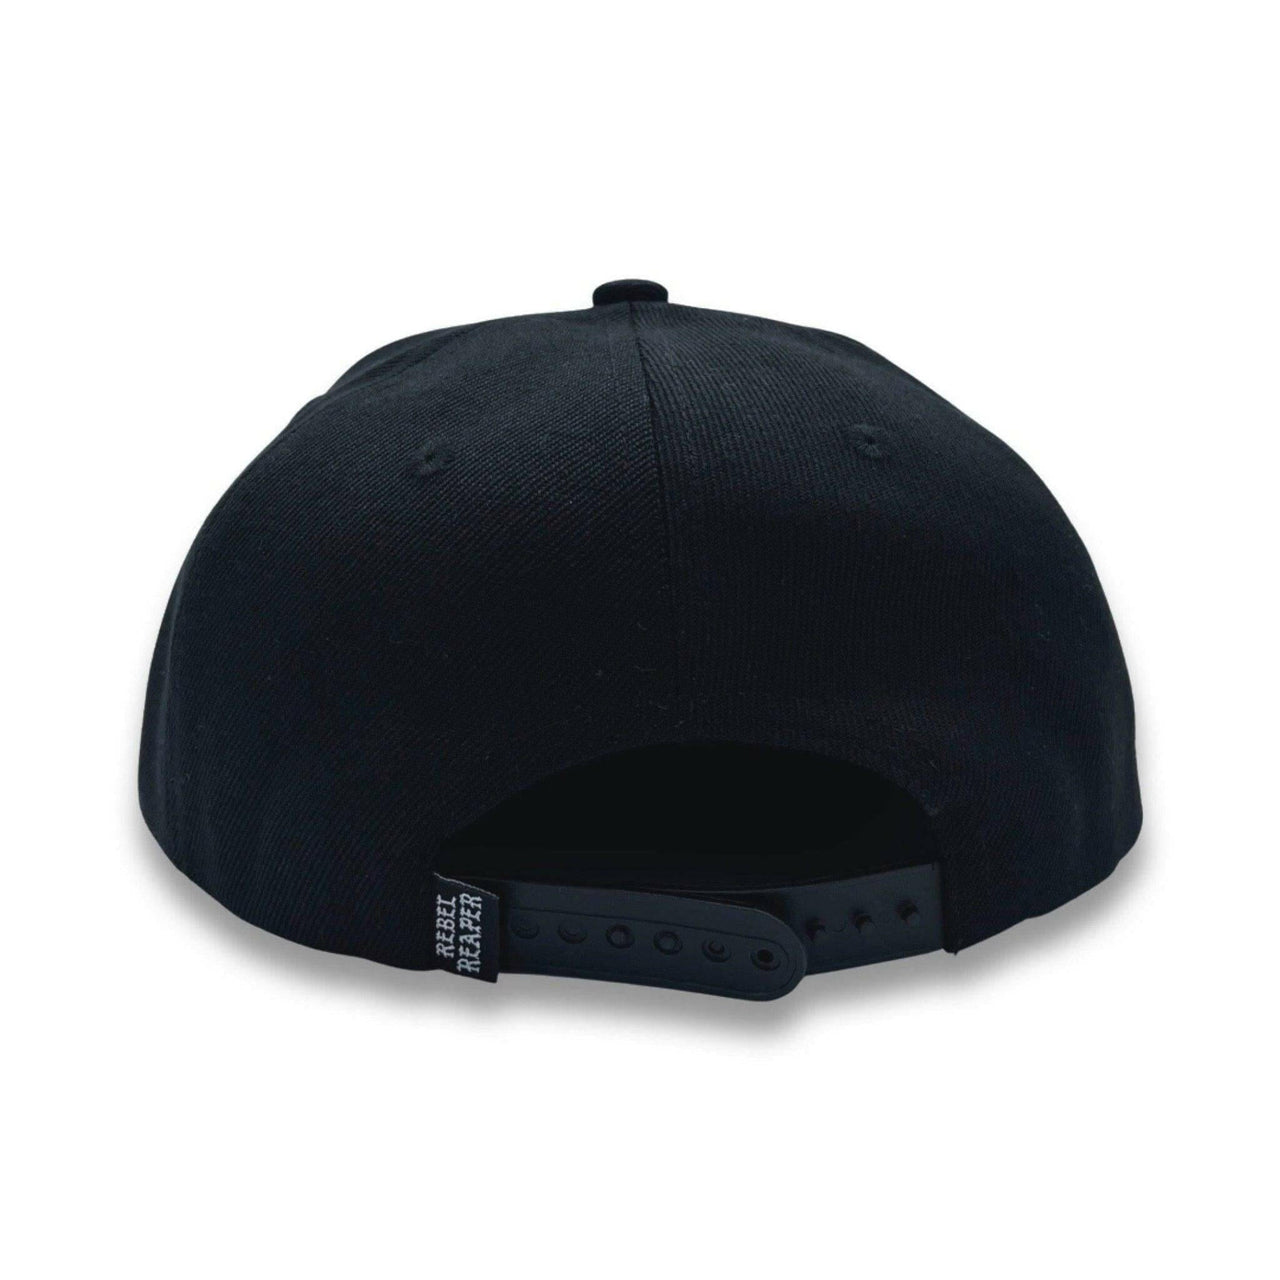 Bear Embroidered Snapback - Rebel Reaper Clothing Company Hats - Snapback